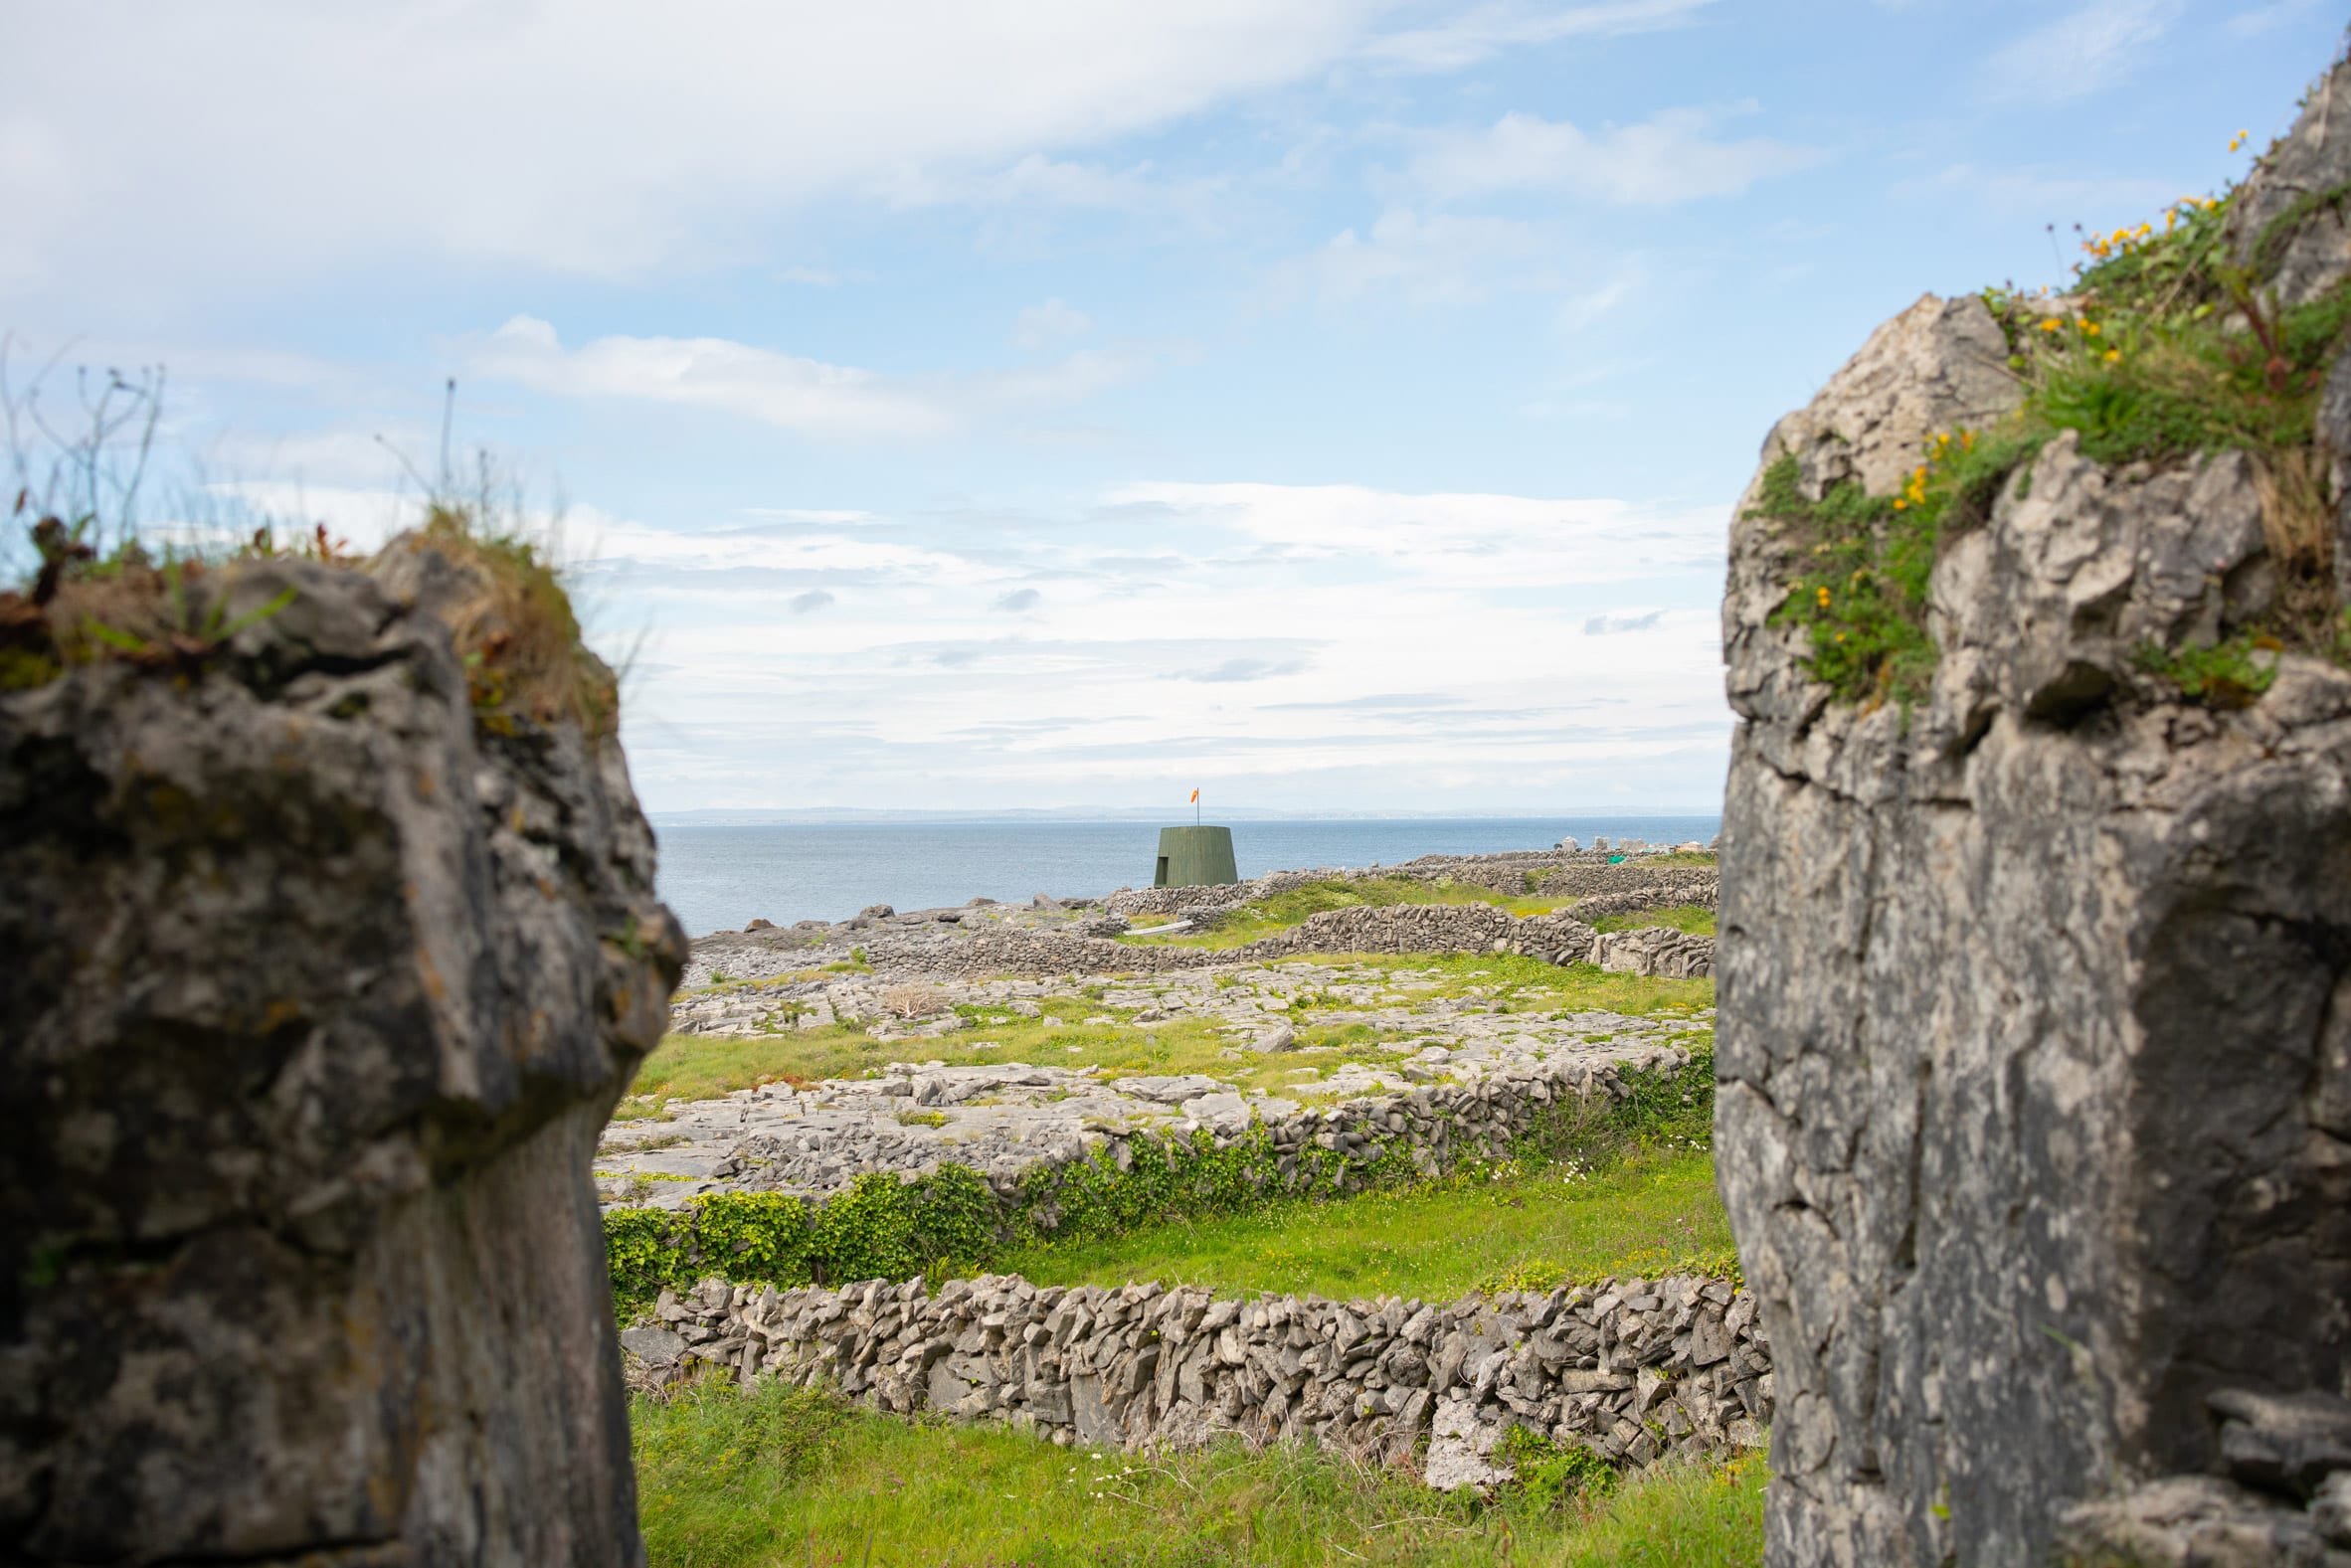 Hut on Inis Oírr island